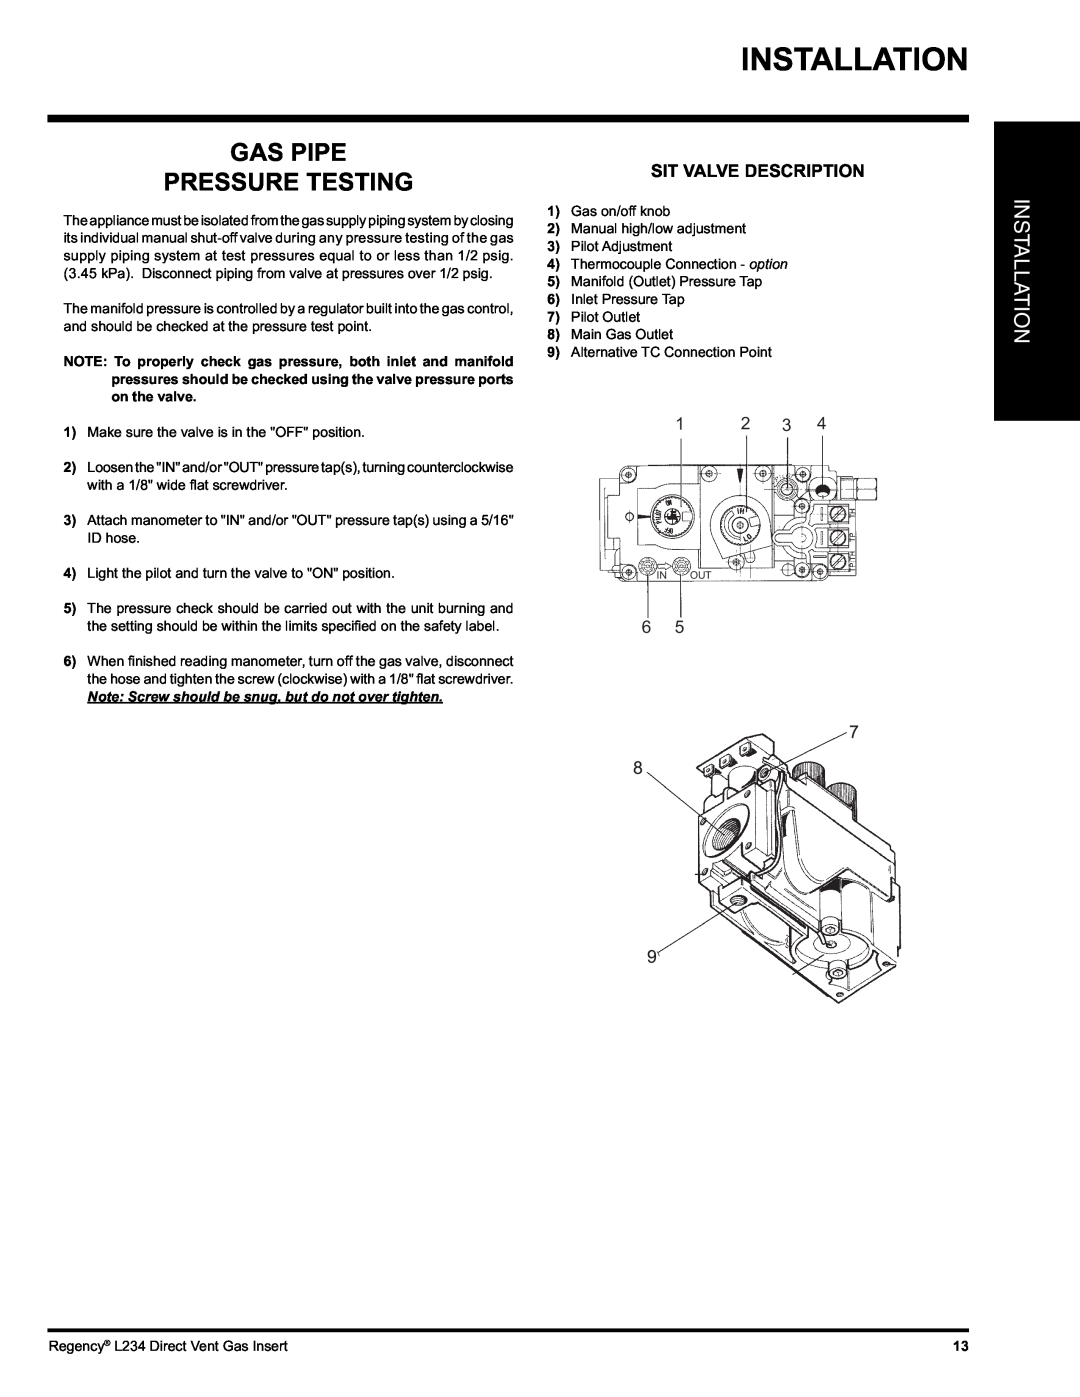 Regency L234-NG, L234-LP installation manual Installation, Gas Pipe Pressure Testing, Sit Valve Description 